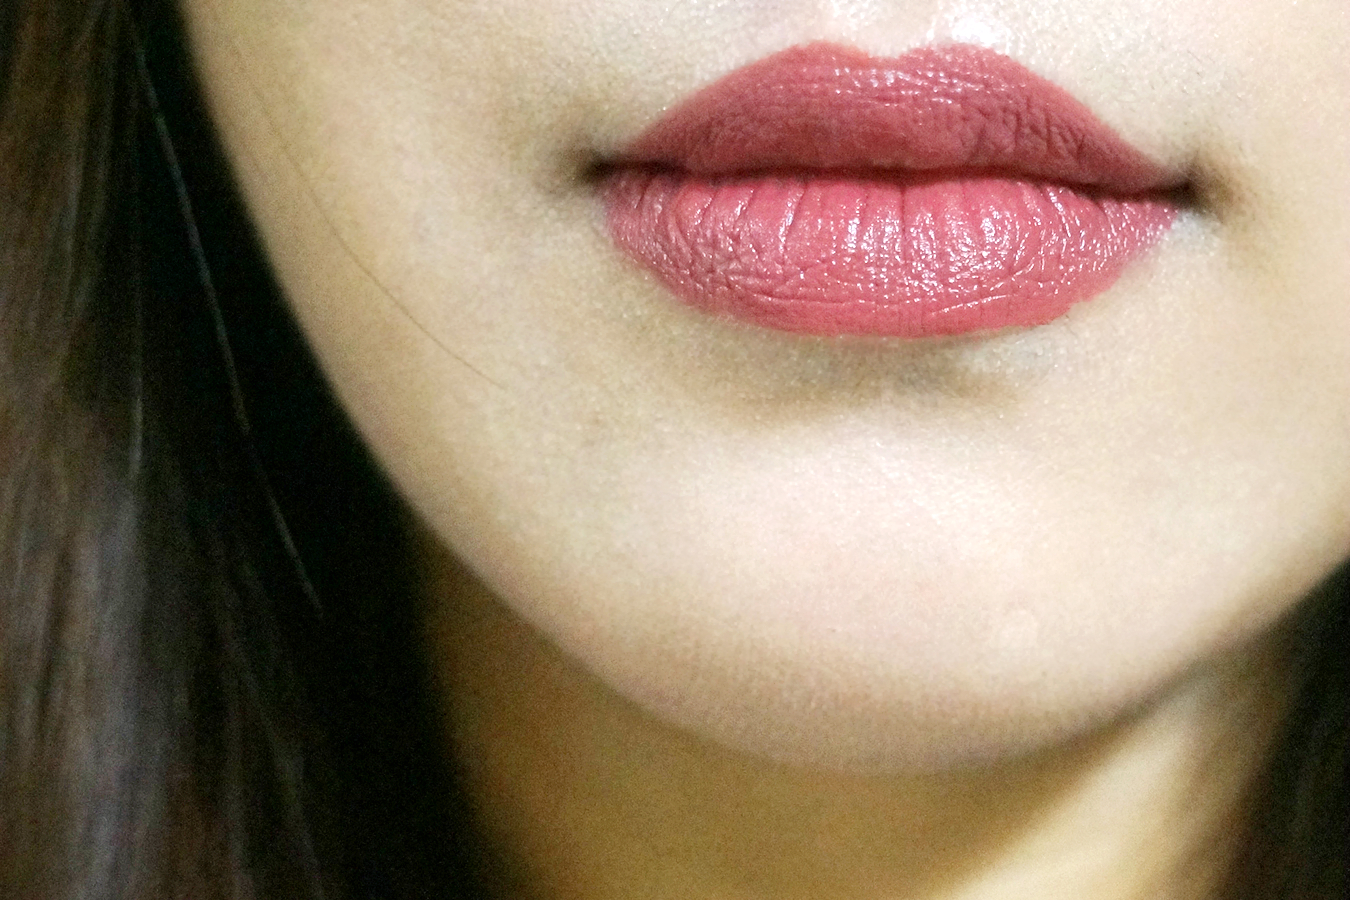 burberry lipstick 421